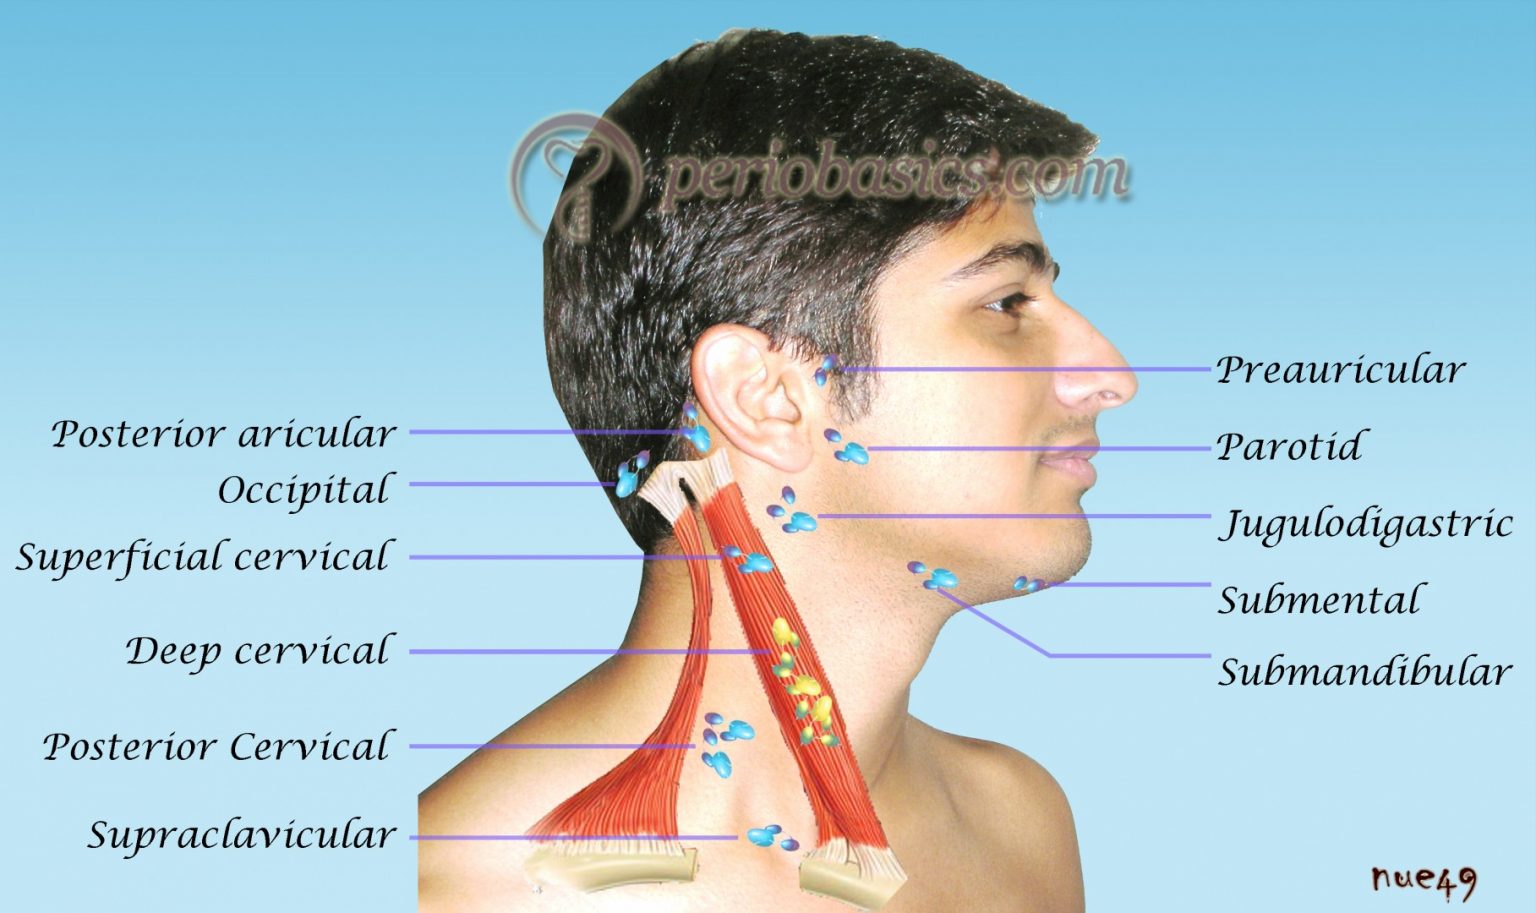 swollen lymph nodes back of neck pictures